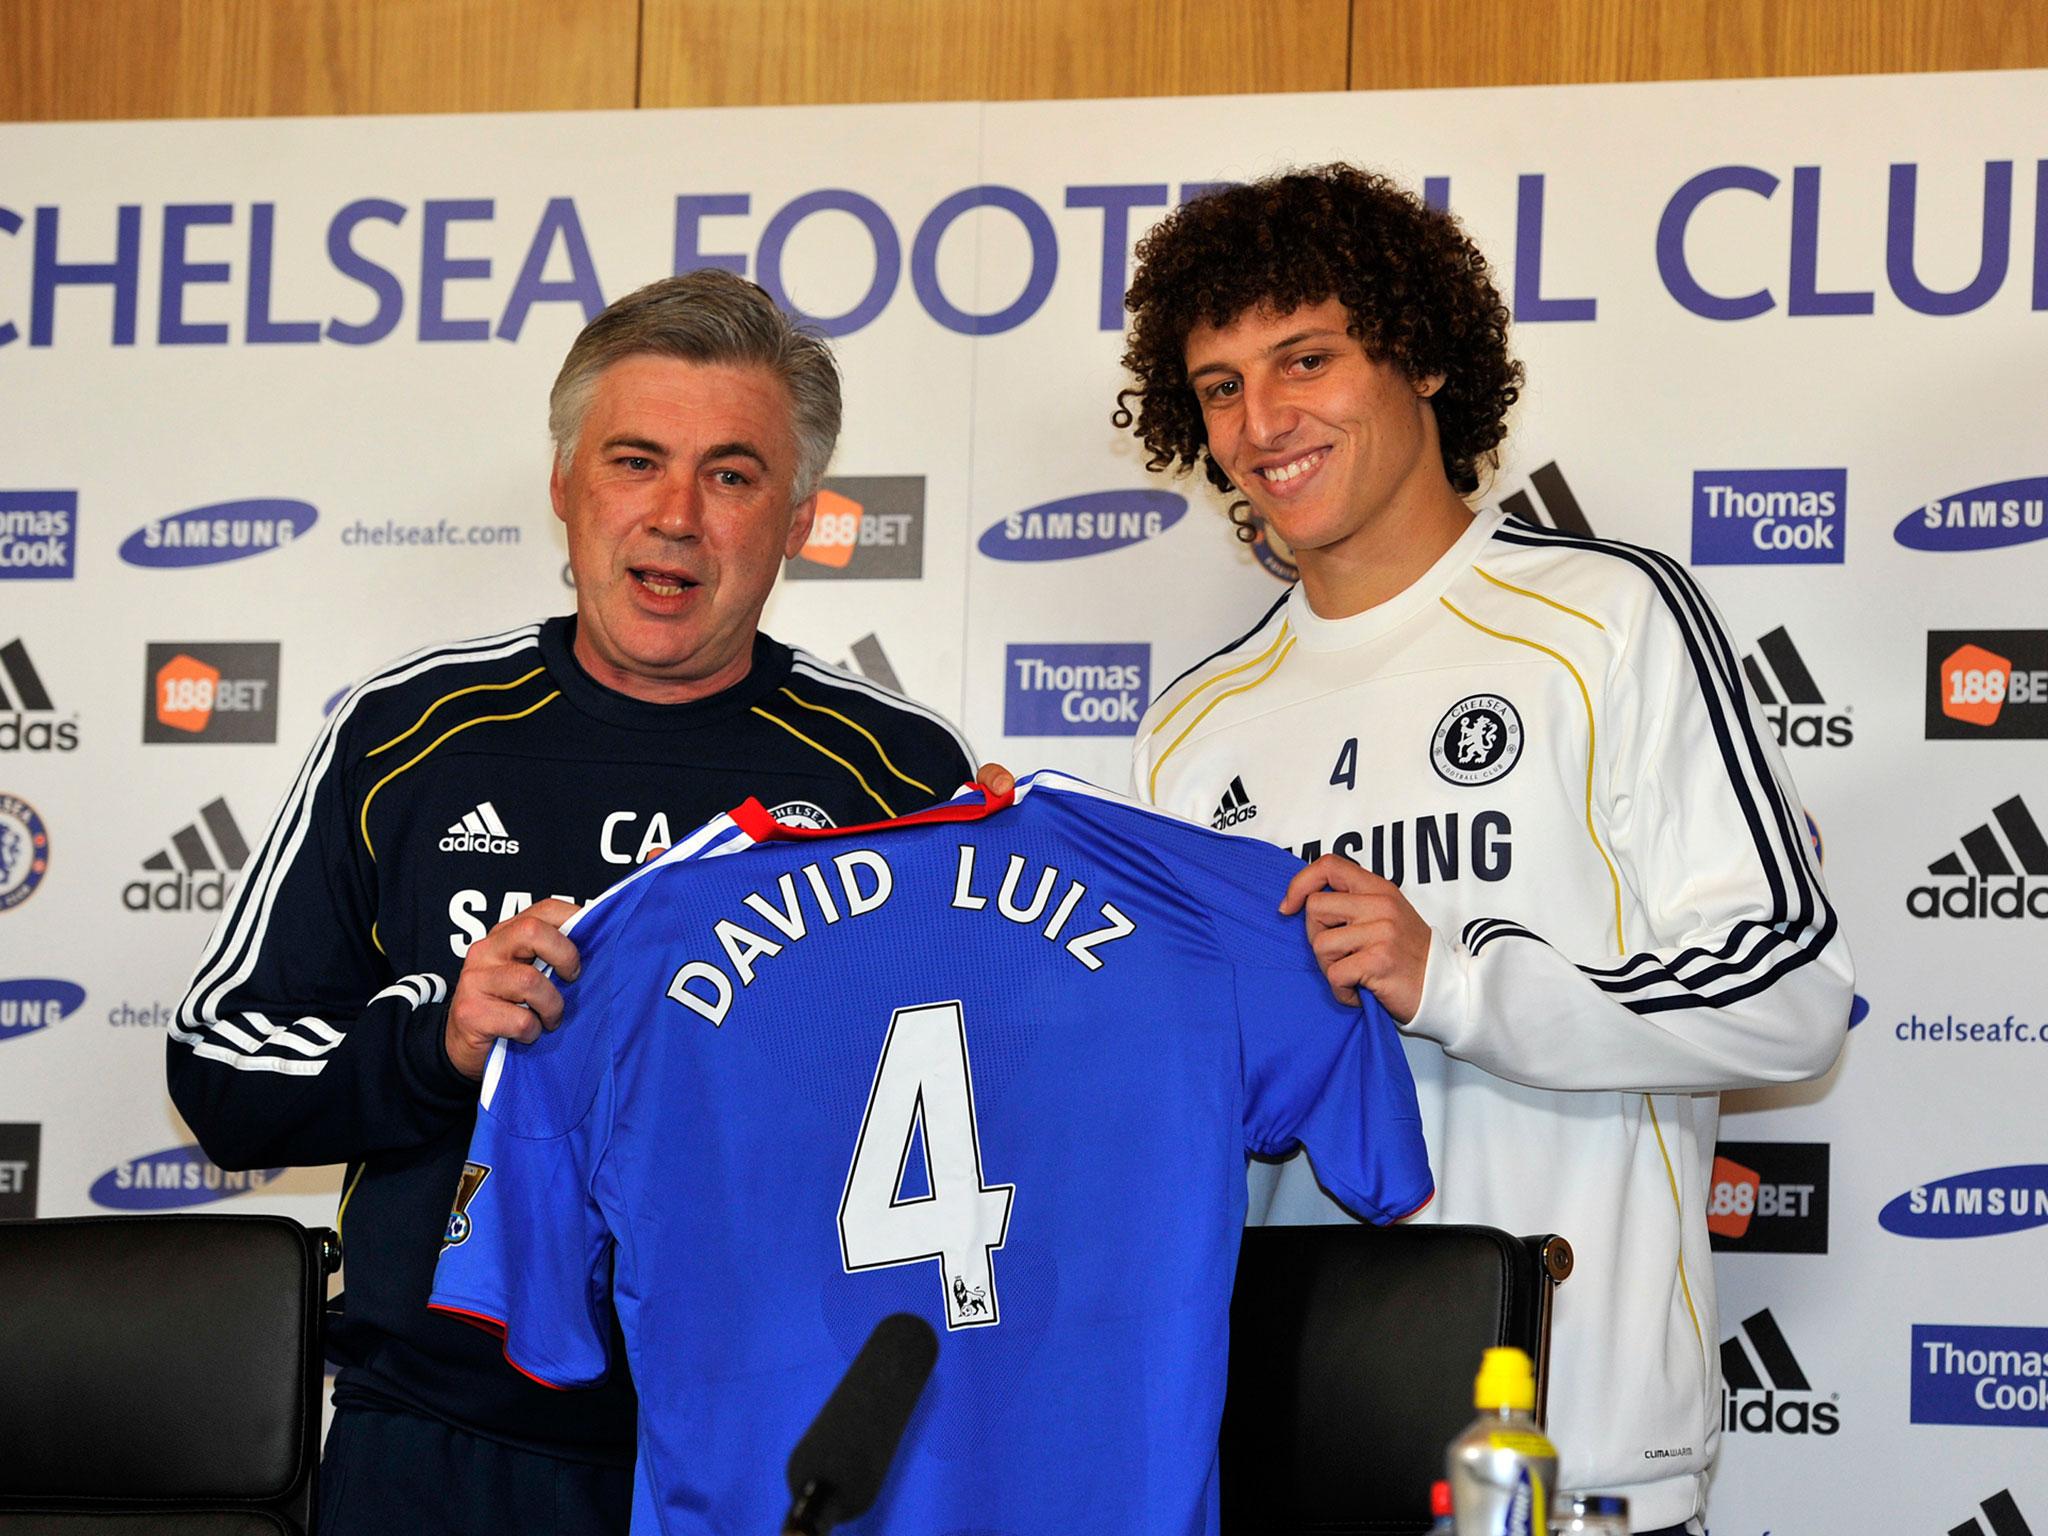 David Luiz signed for Chelsea under Carlos Ancelotti for £21,5m